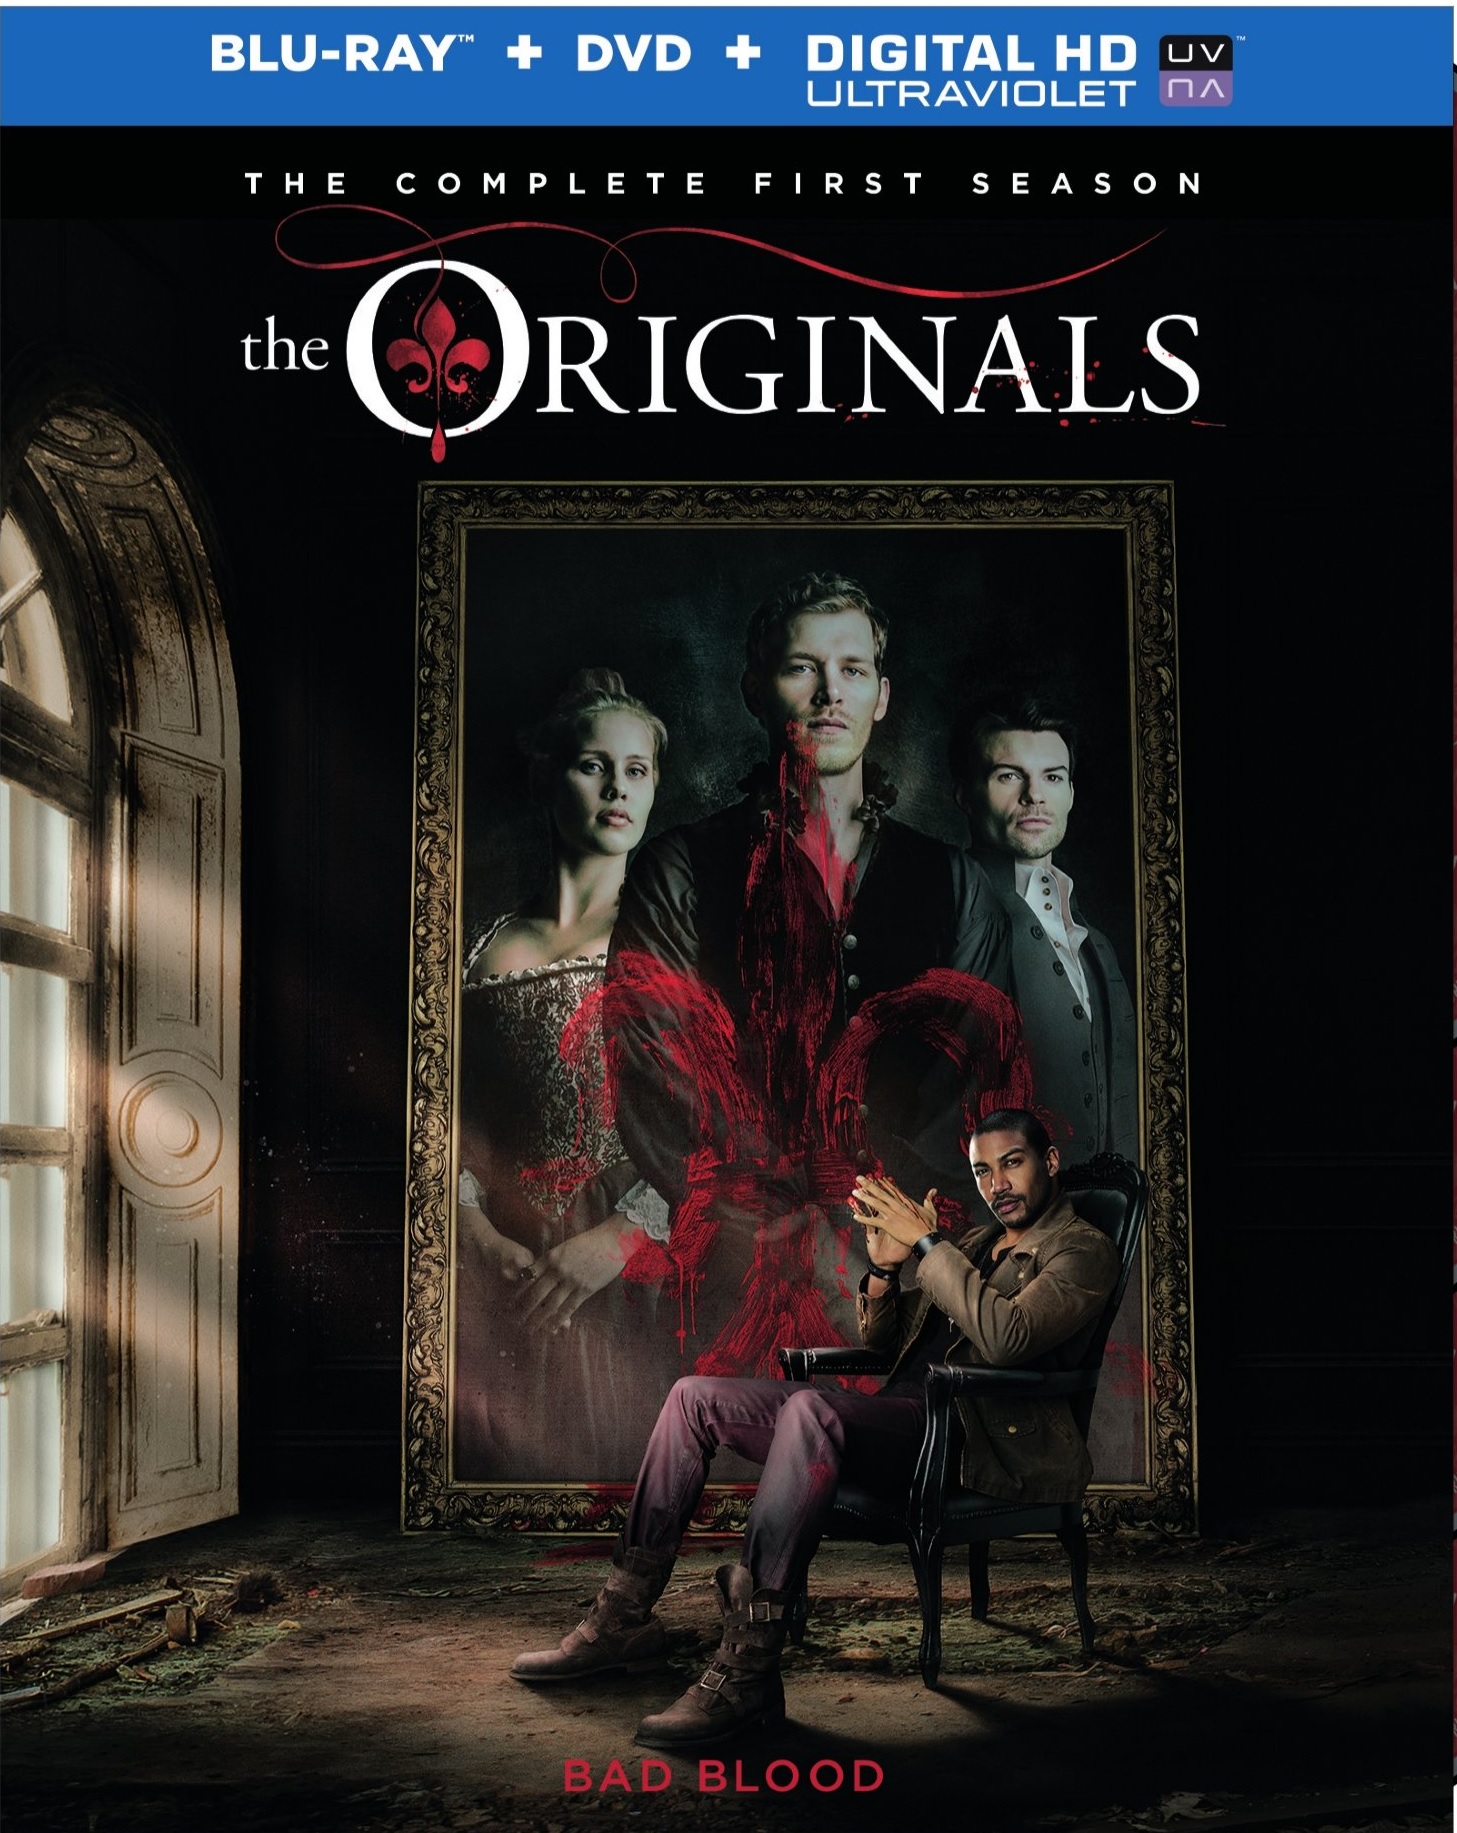 The Originals Season 1 Blu-ray Review